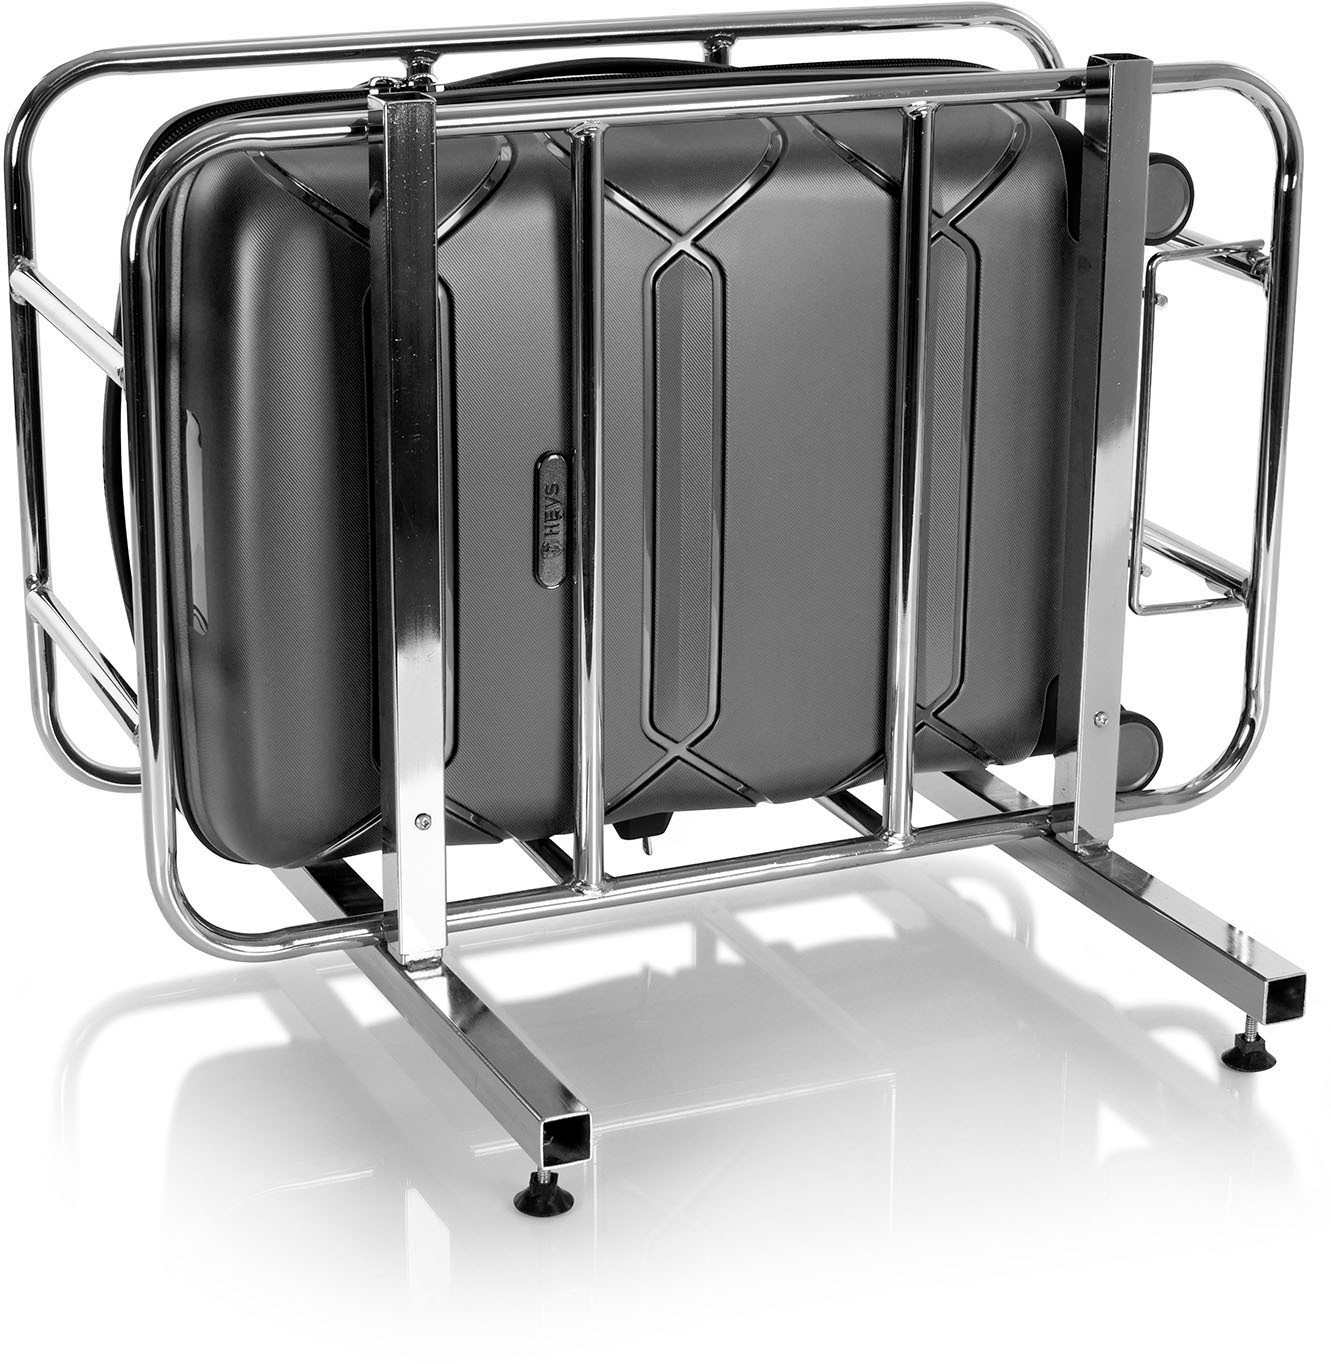 Heys Hartschalen-Trolley »Milos grau, 53 cm«, 4 Rollen, Hartschalen-Koffer Handgepäck-Koffer TSA Schloss Volumenerweiterung